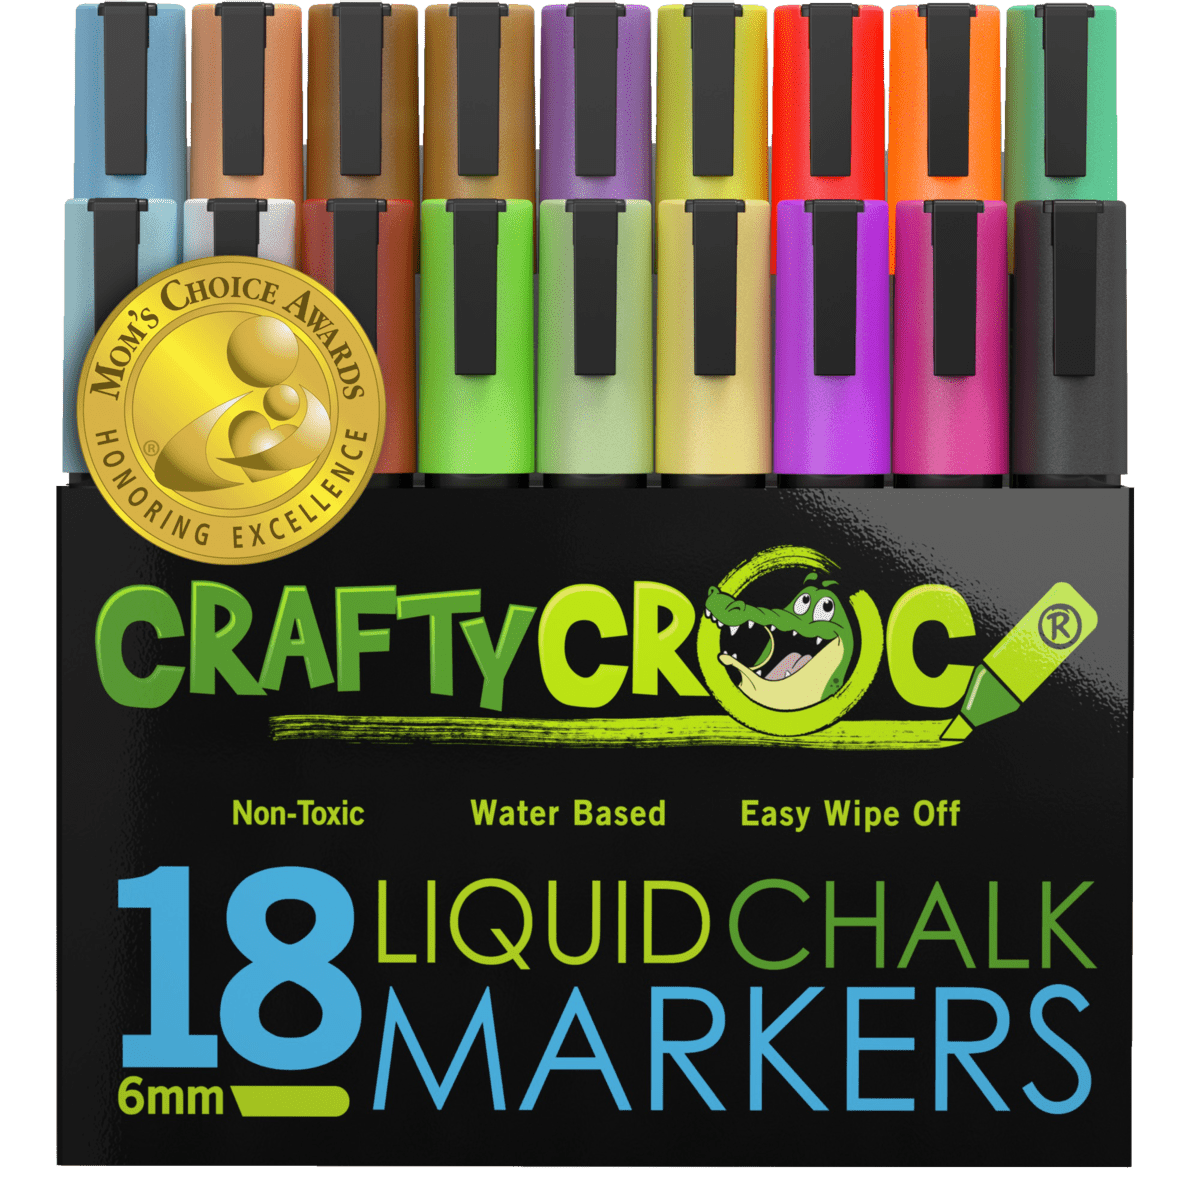 ARTISTRO 8 Neon Chalk Markers - Erasable Chalk Pens with 6mm Reversibl –  WoodArtSupply